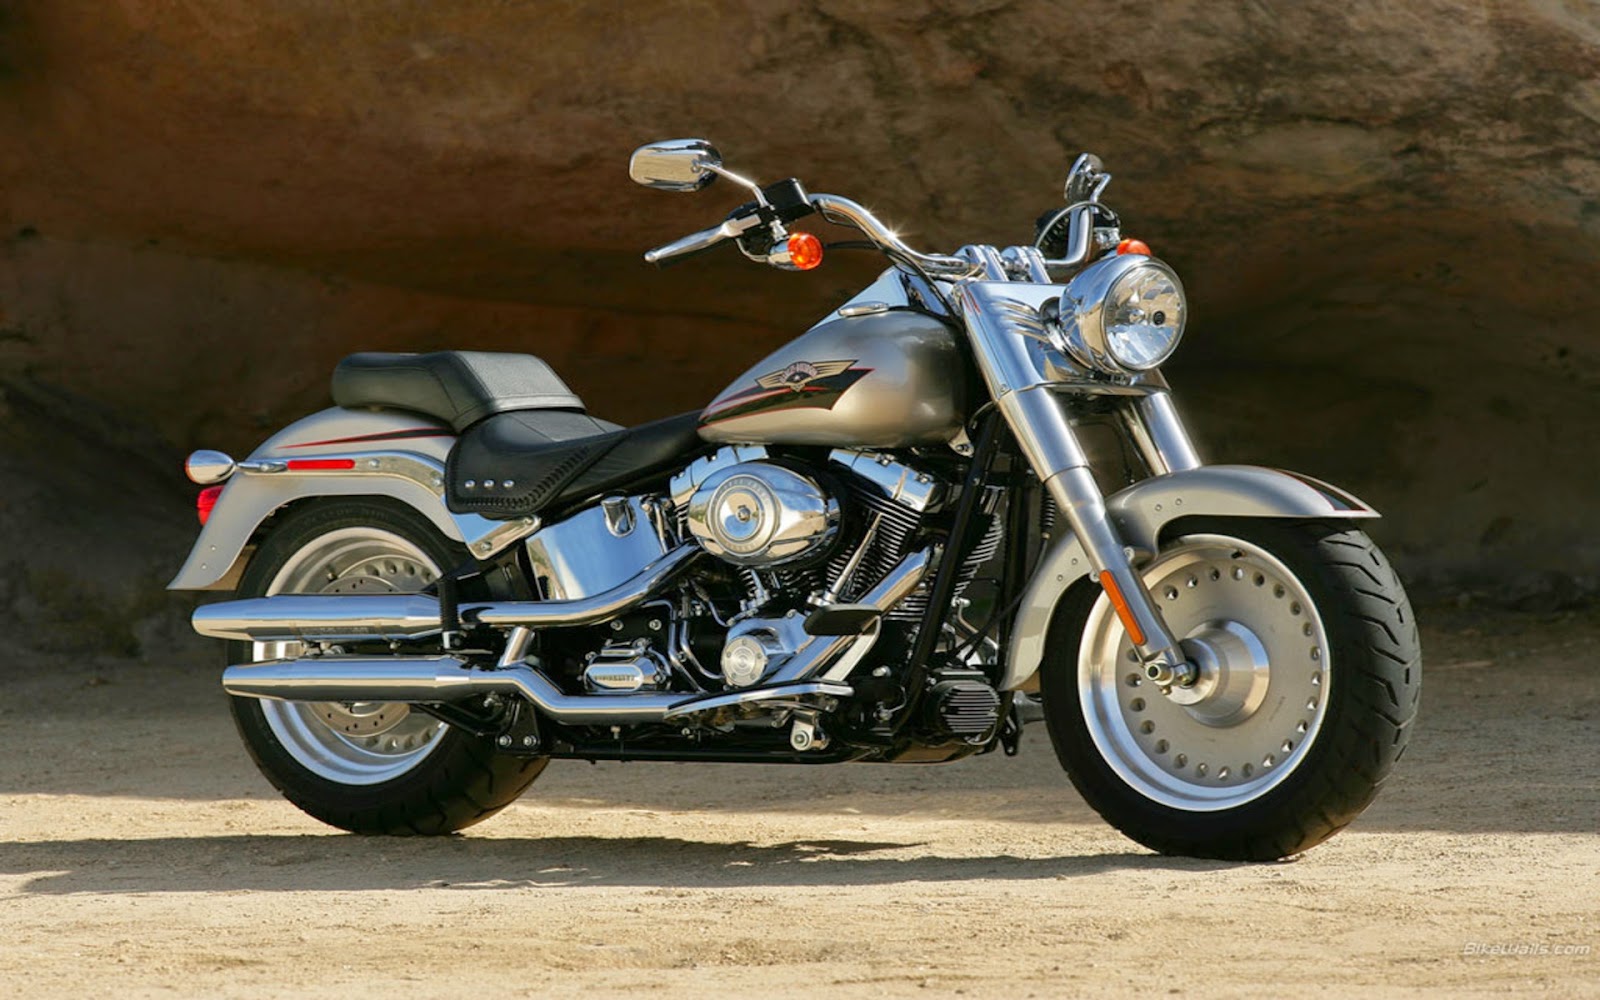 Kumpulan Gambar Motor: Gambar Motor Harley Davidson